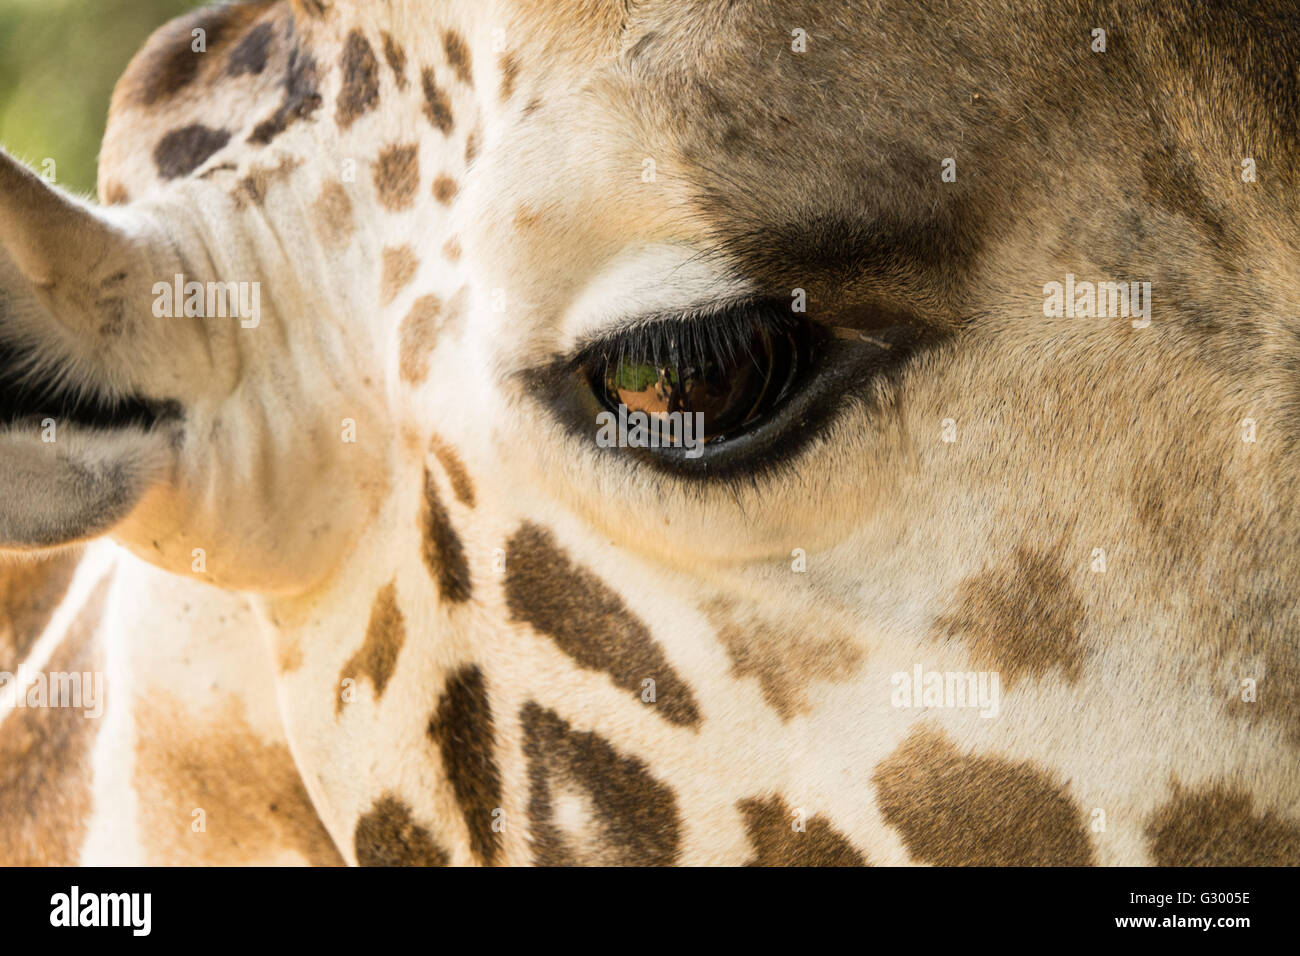 Close up of a giraffe eye Stock Photo